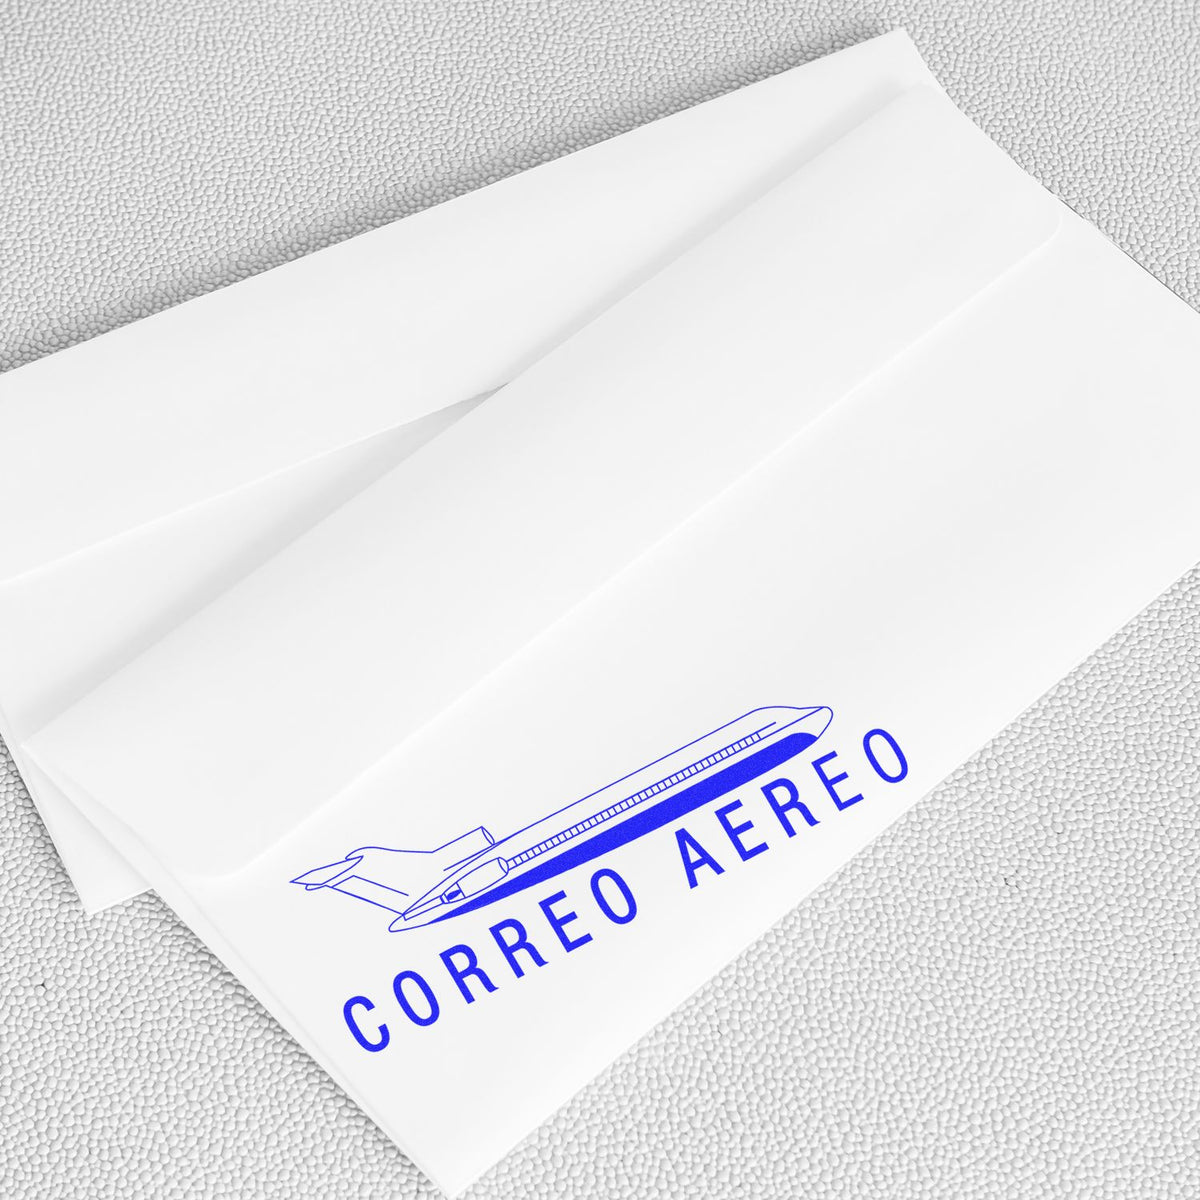 Self-Inking Correo Aero Stamp In Use Photo